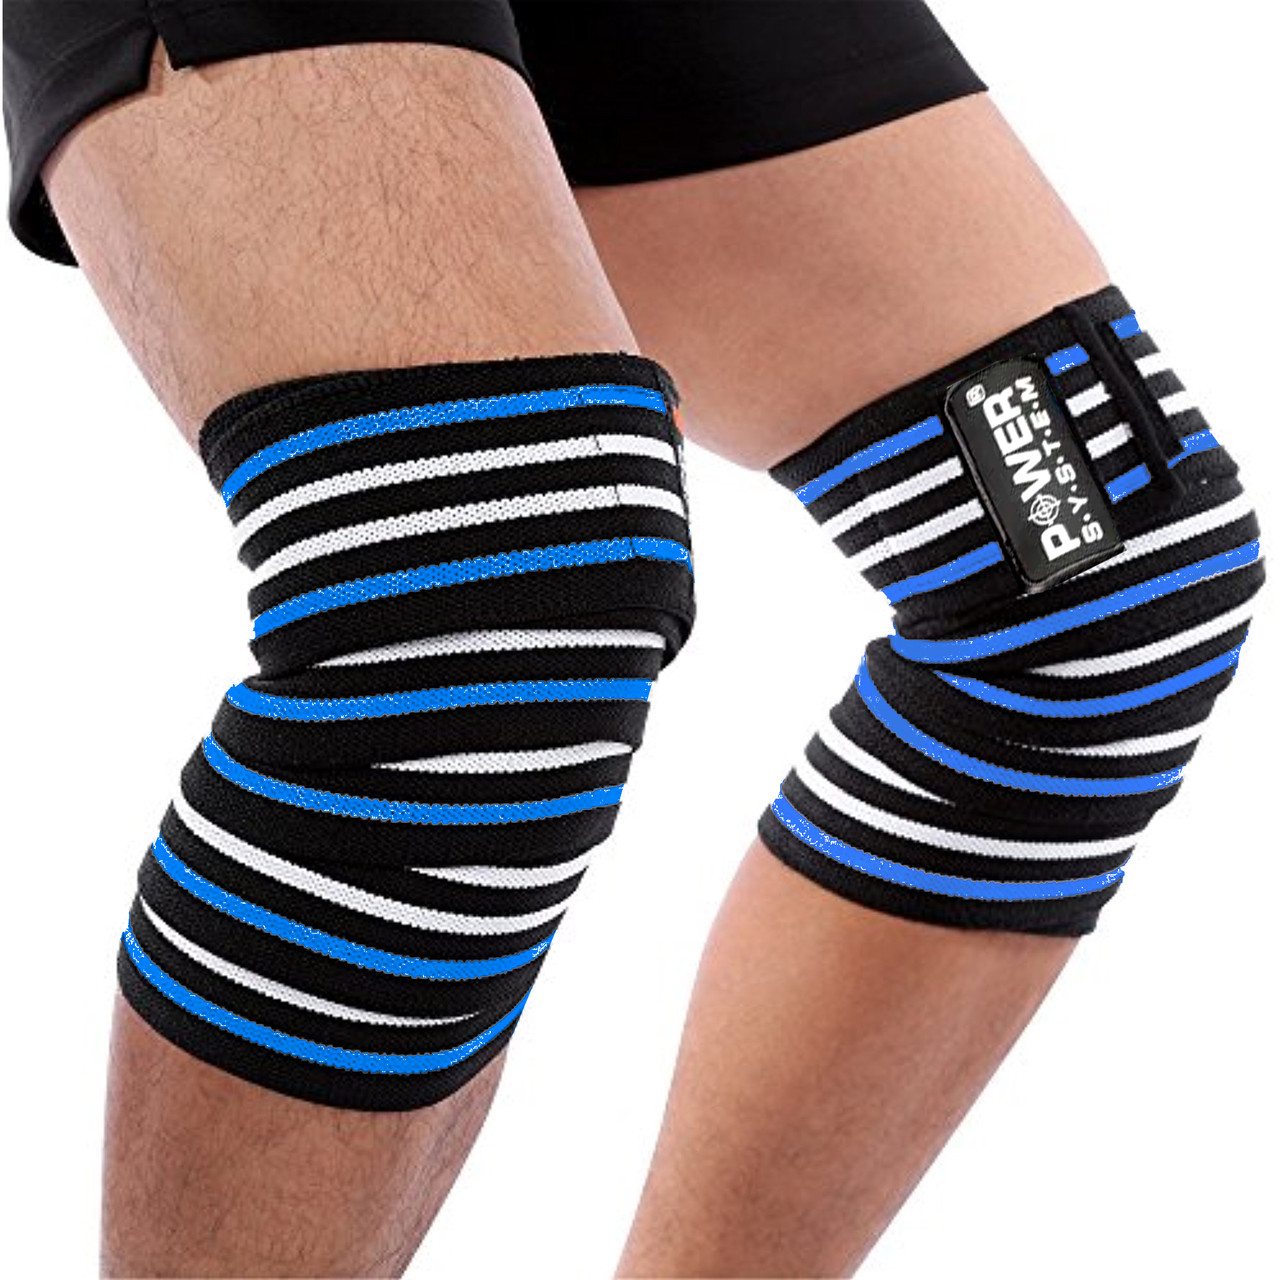 Бинты на колени Power System Knee Wraps PS-3700 Blue/Black